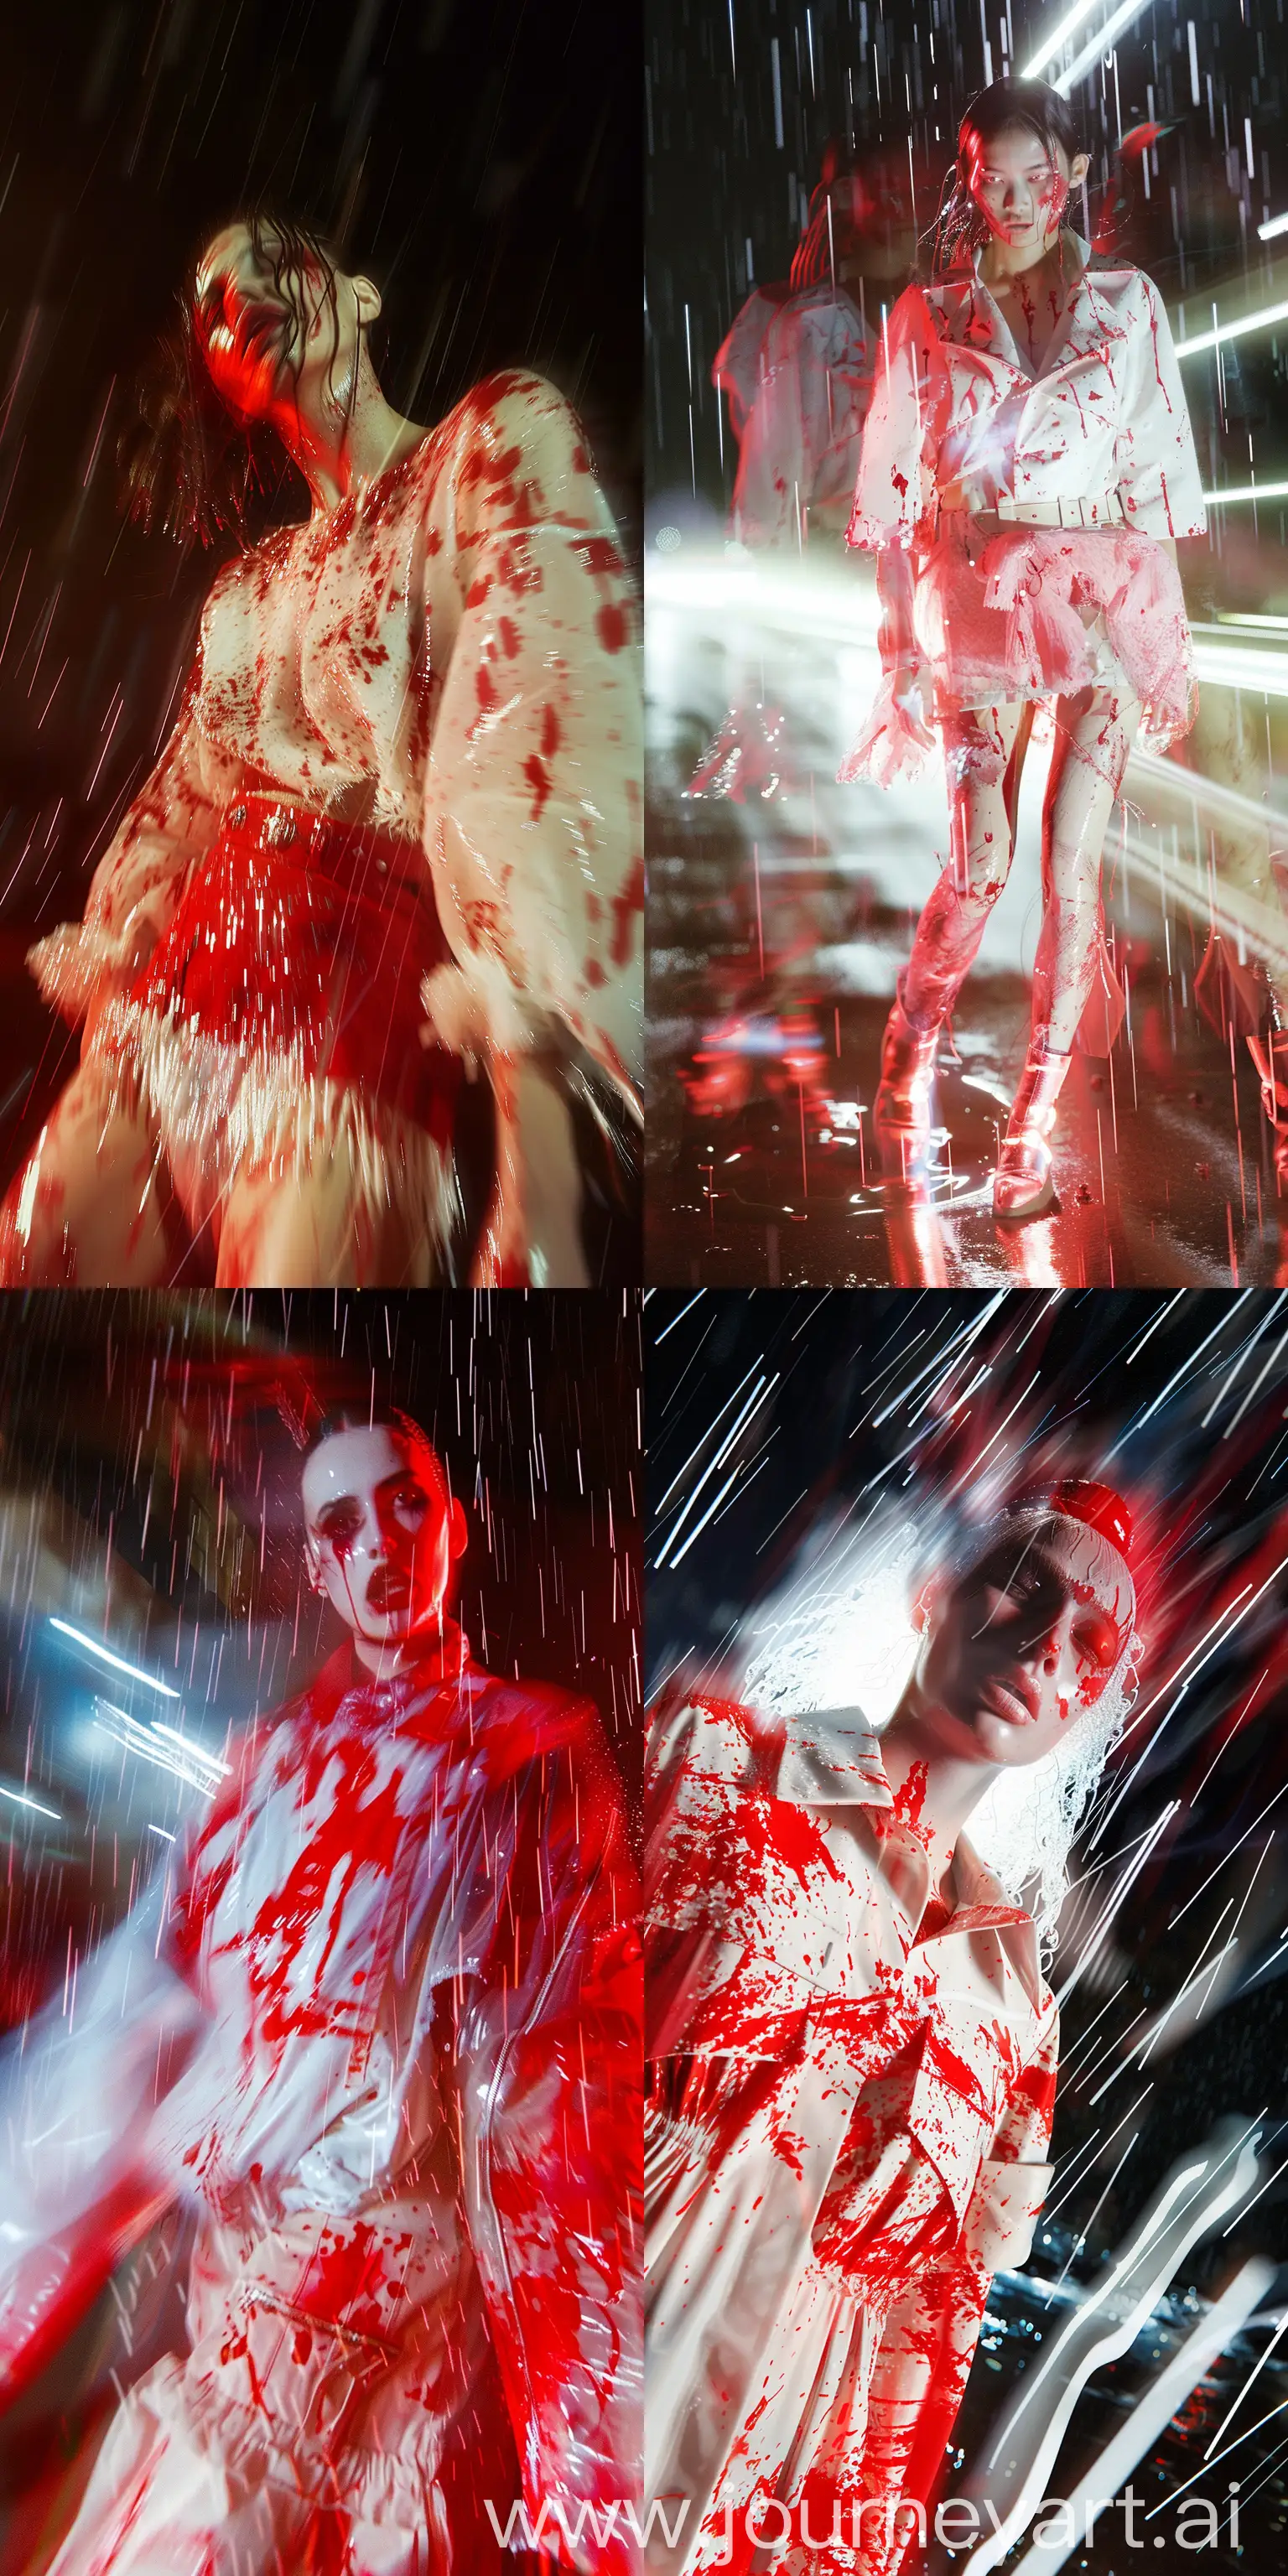 Ethereal-Balenciaga-Horror-Fashion-NeonInfused-Night-Rain